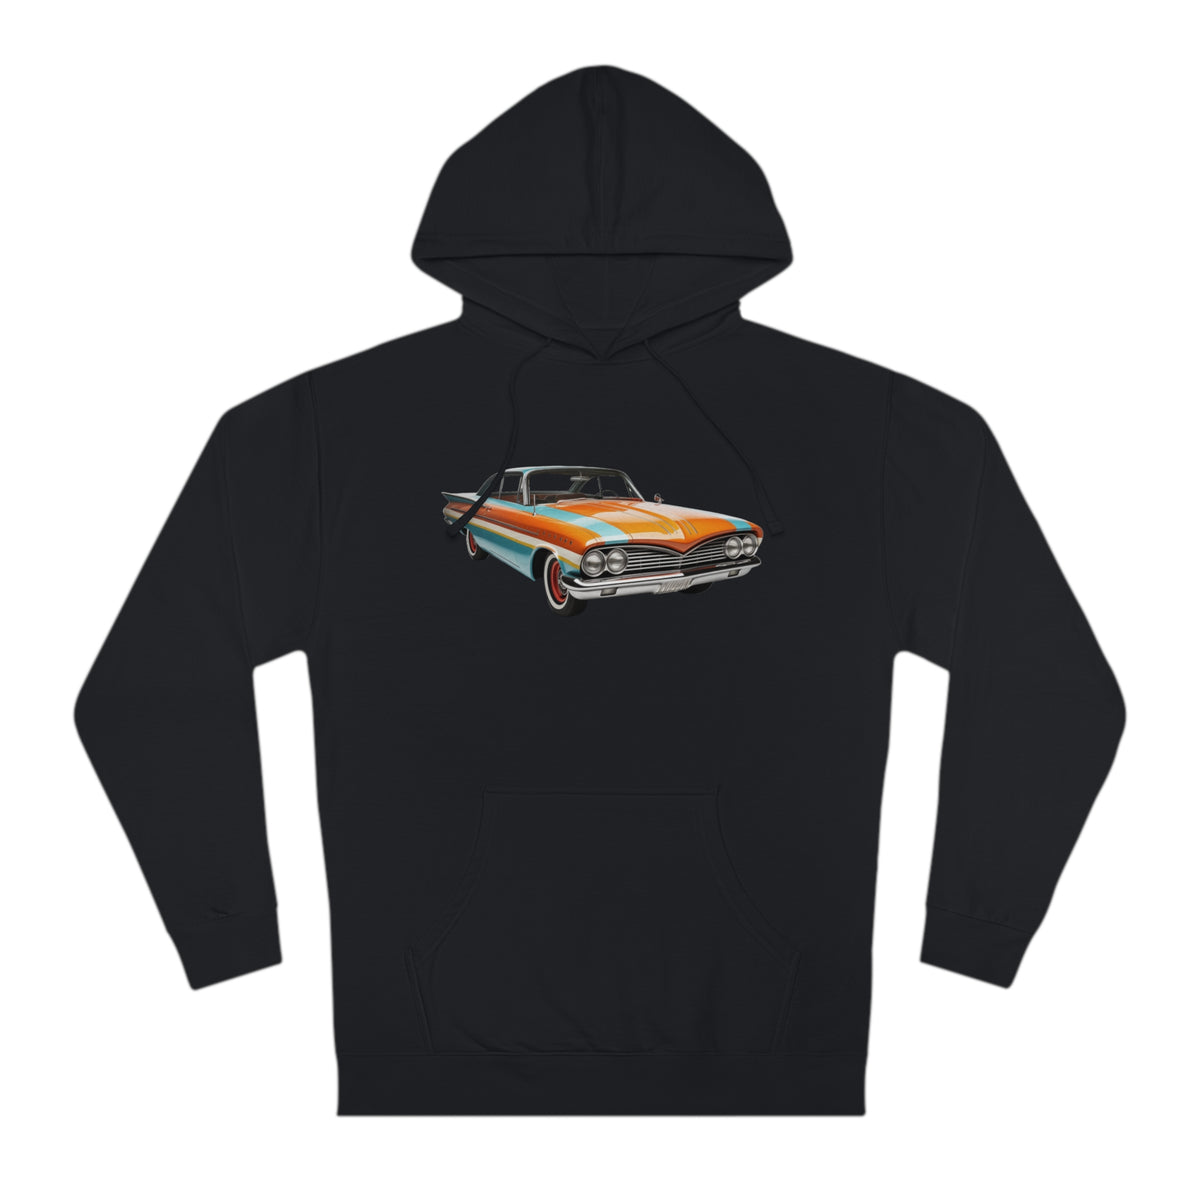 "Sunset Cruiser" Classic Vintage Car Enthusiast Hoodie/Hooded Sweatshirt